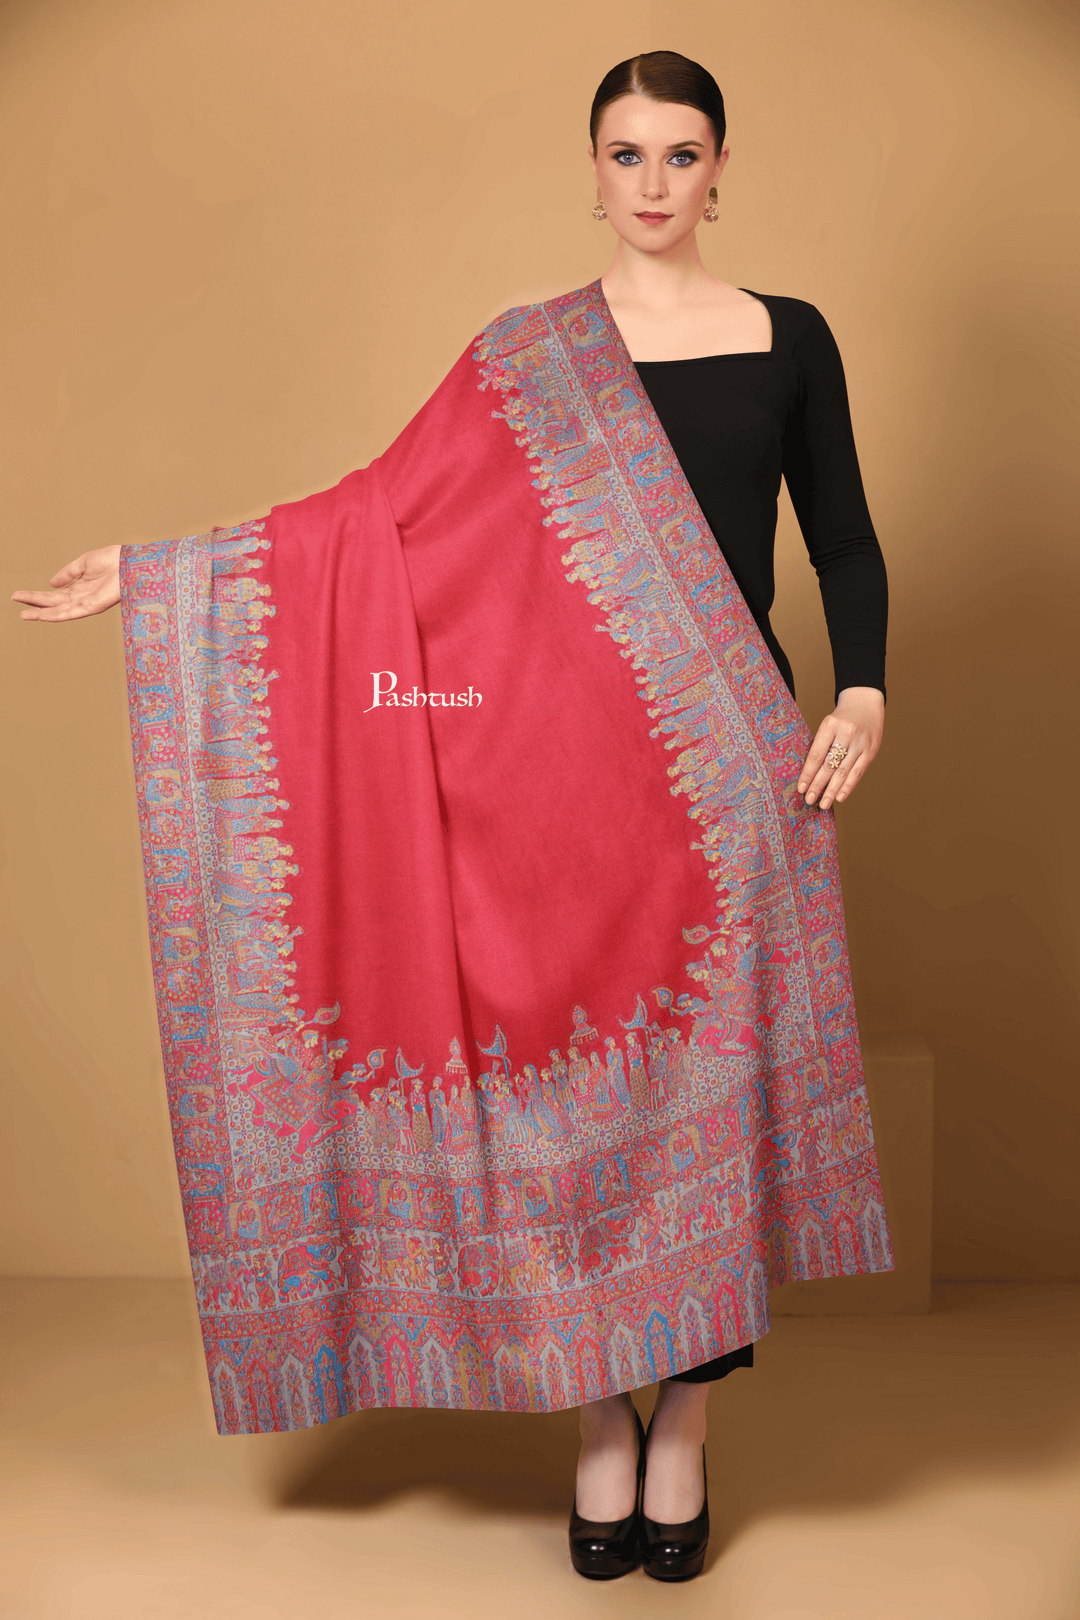 Pashtush India Womens Shawls Pashtush Womens Fine Wool Shawl, Royal Darbar Palla, Woven Design, Red And Beige